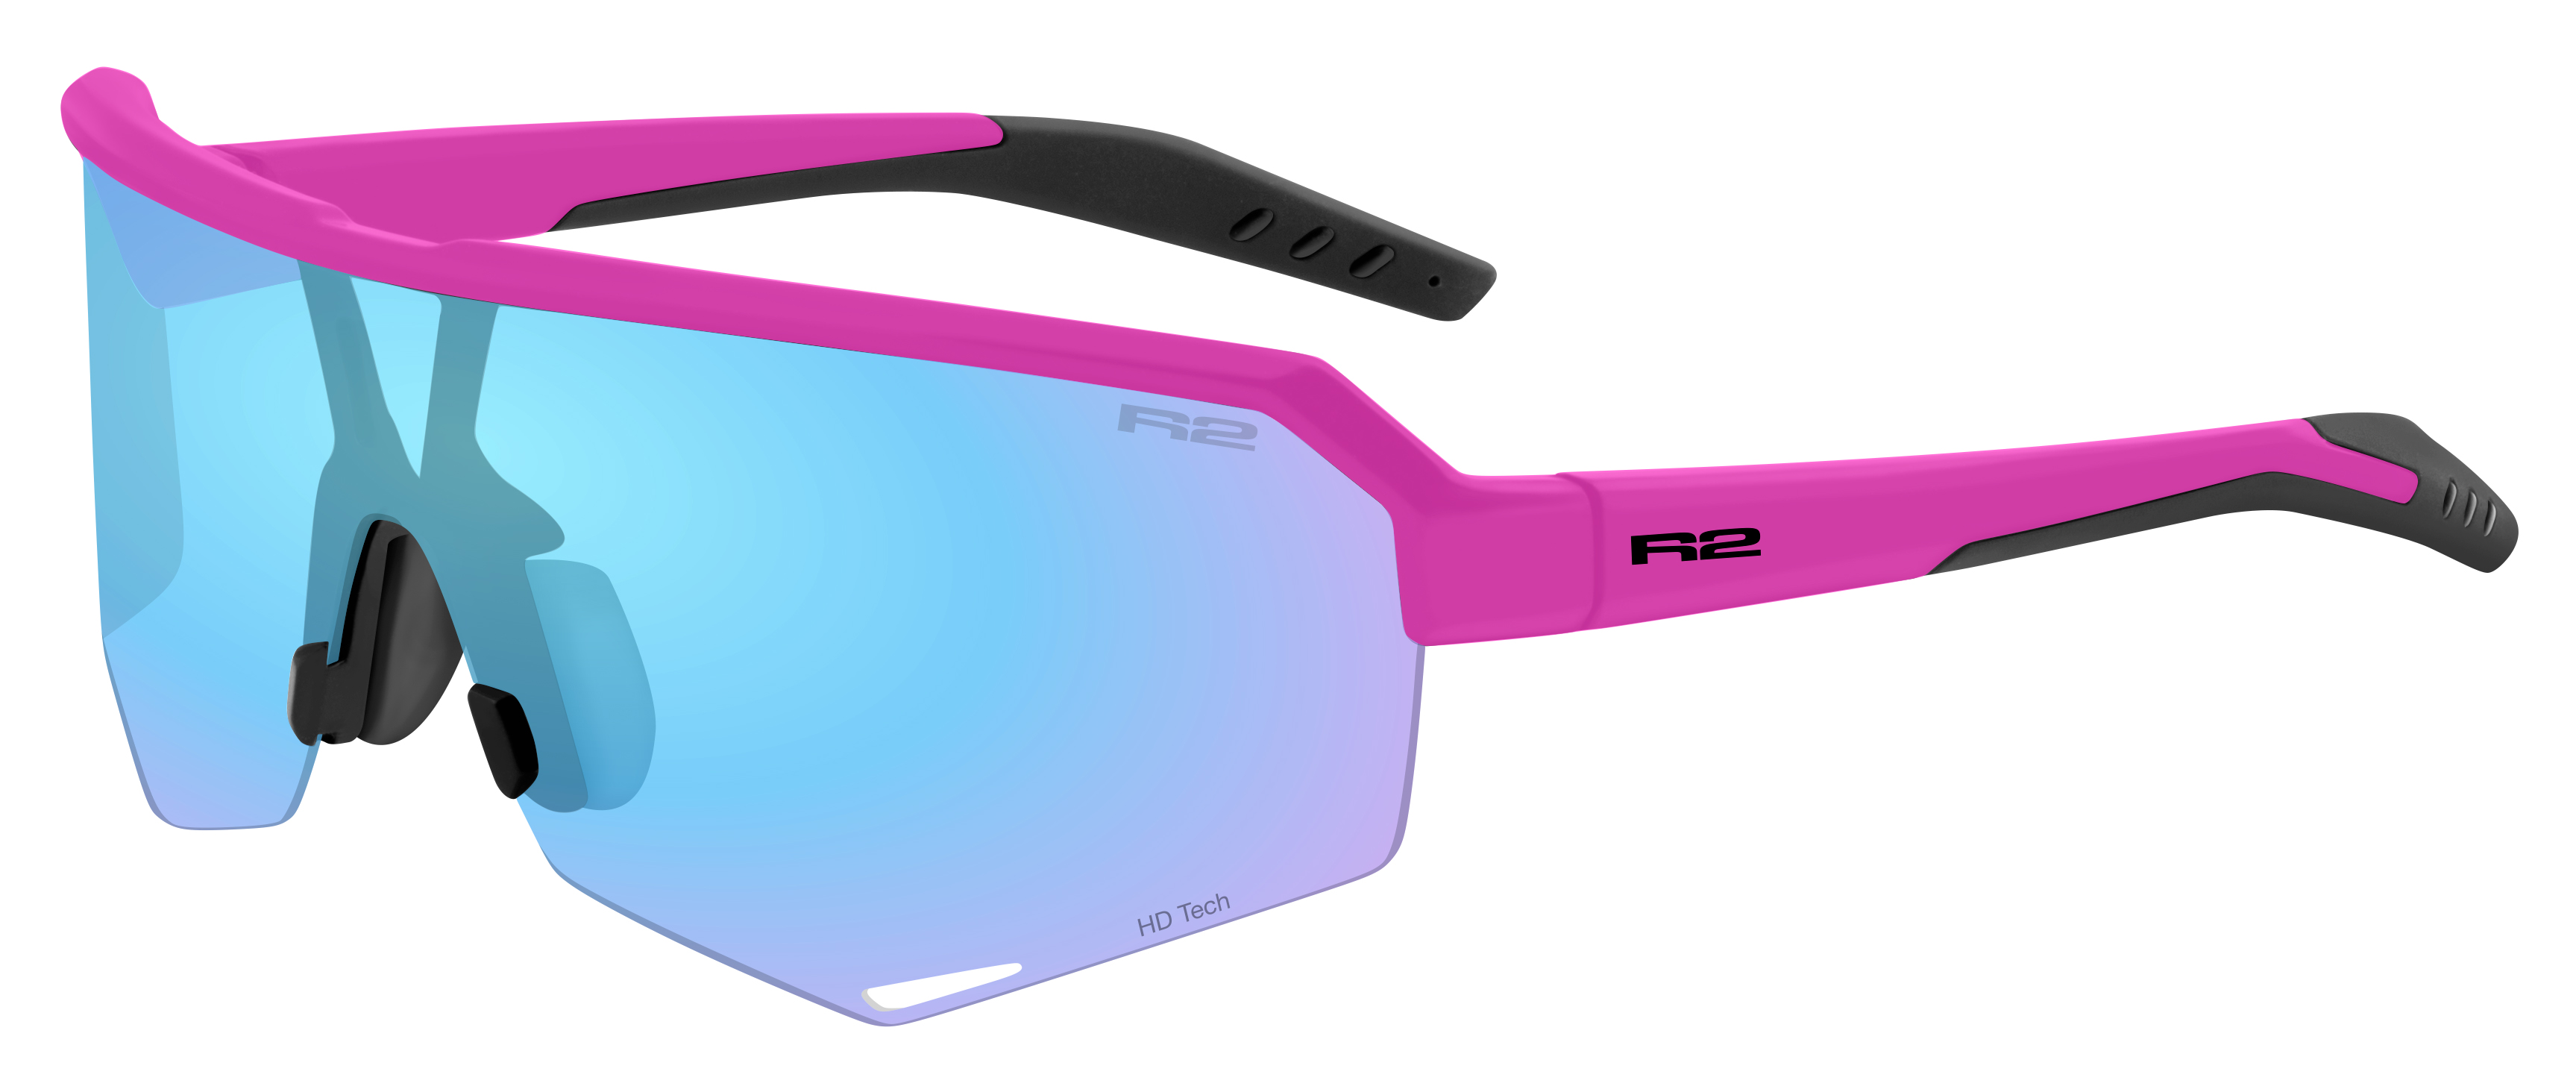 HD sport sunglasses R2 FLUKE AT100P